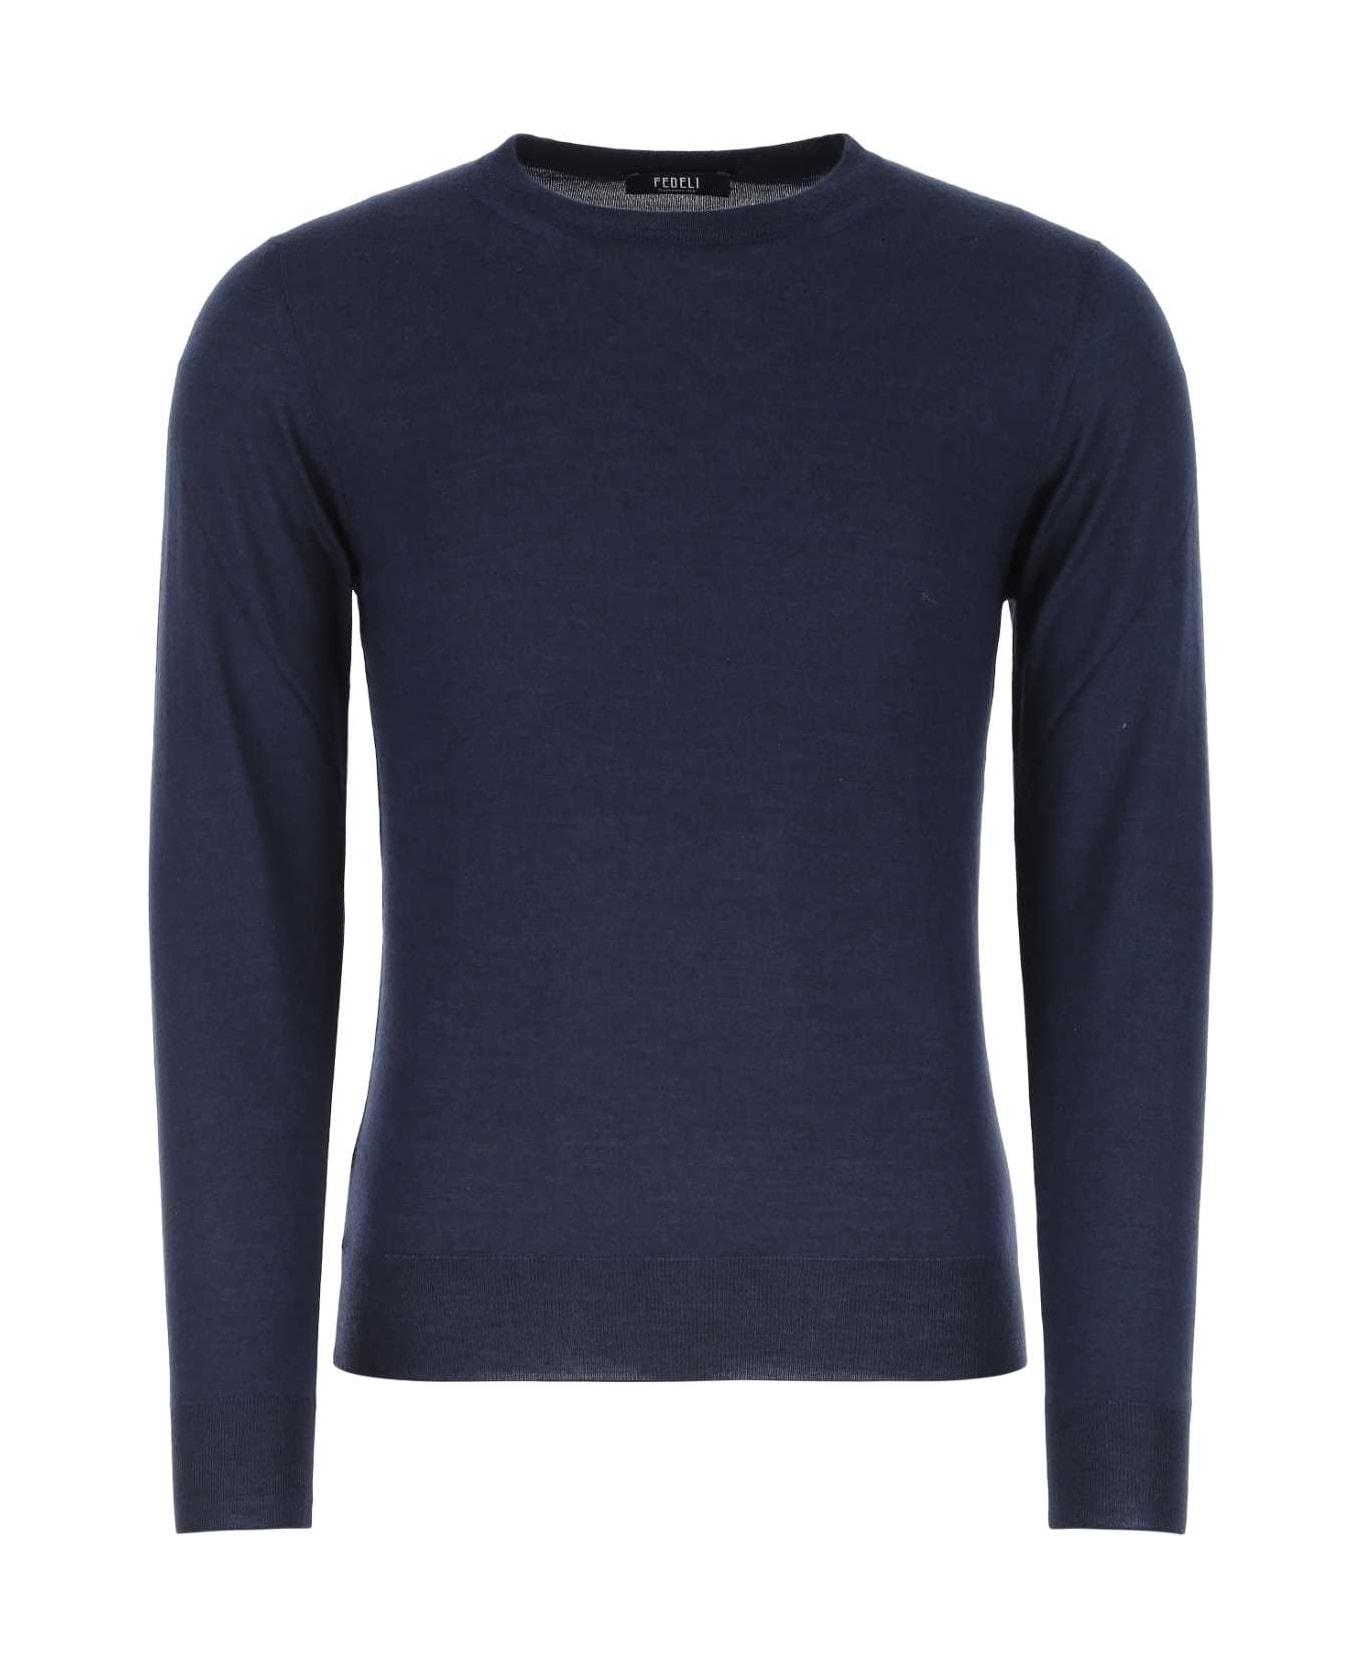 Fedeli Dark Blue Cashmere Blend Sweater - 19